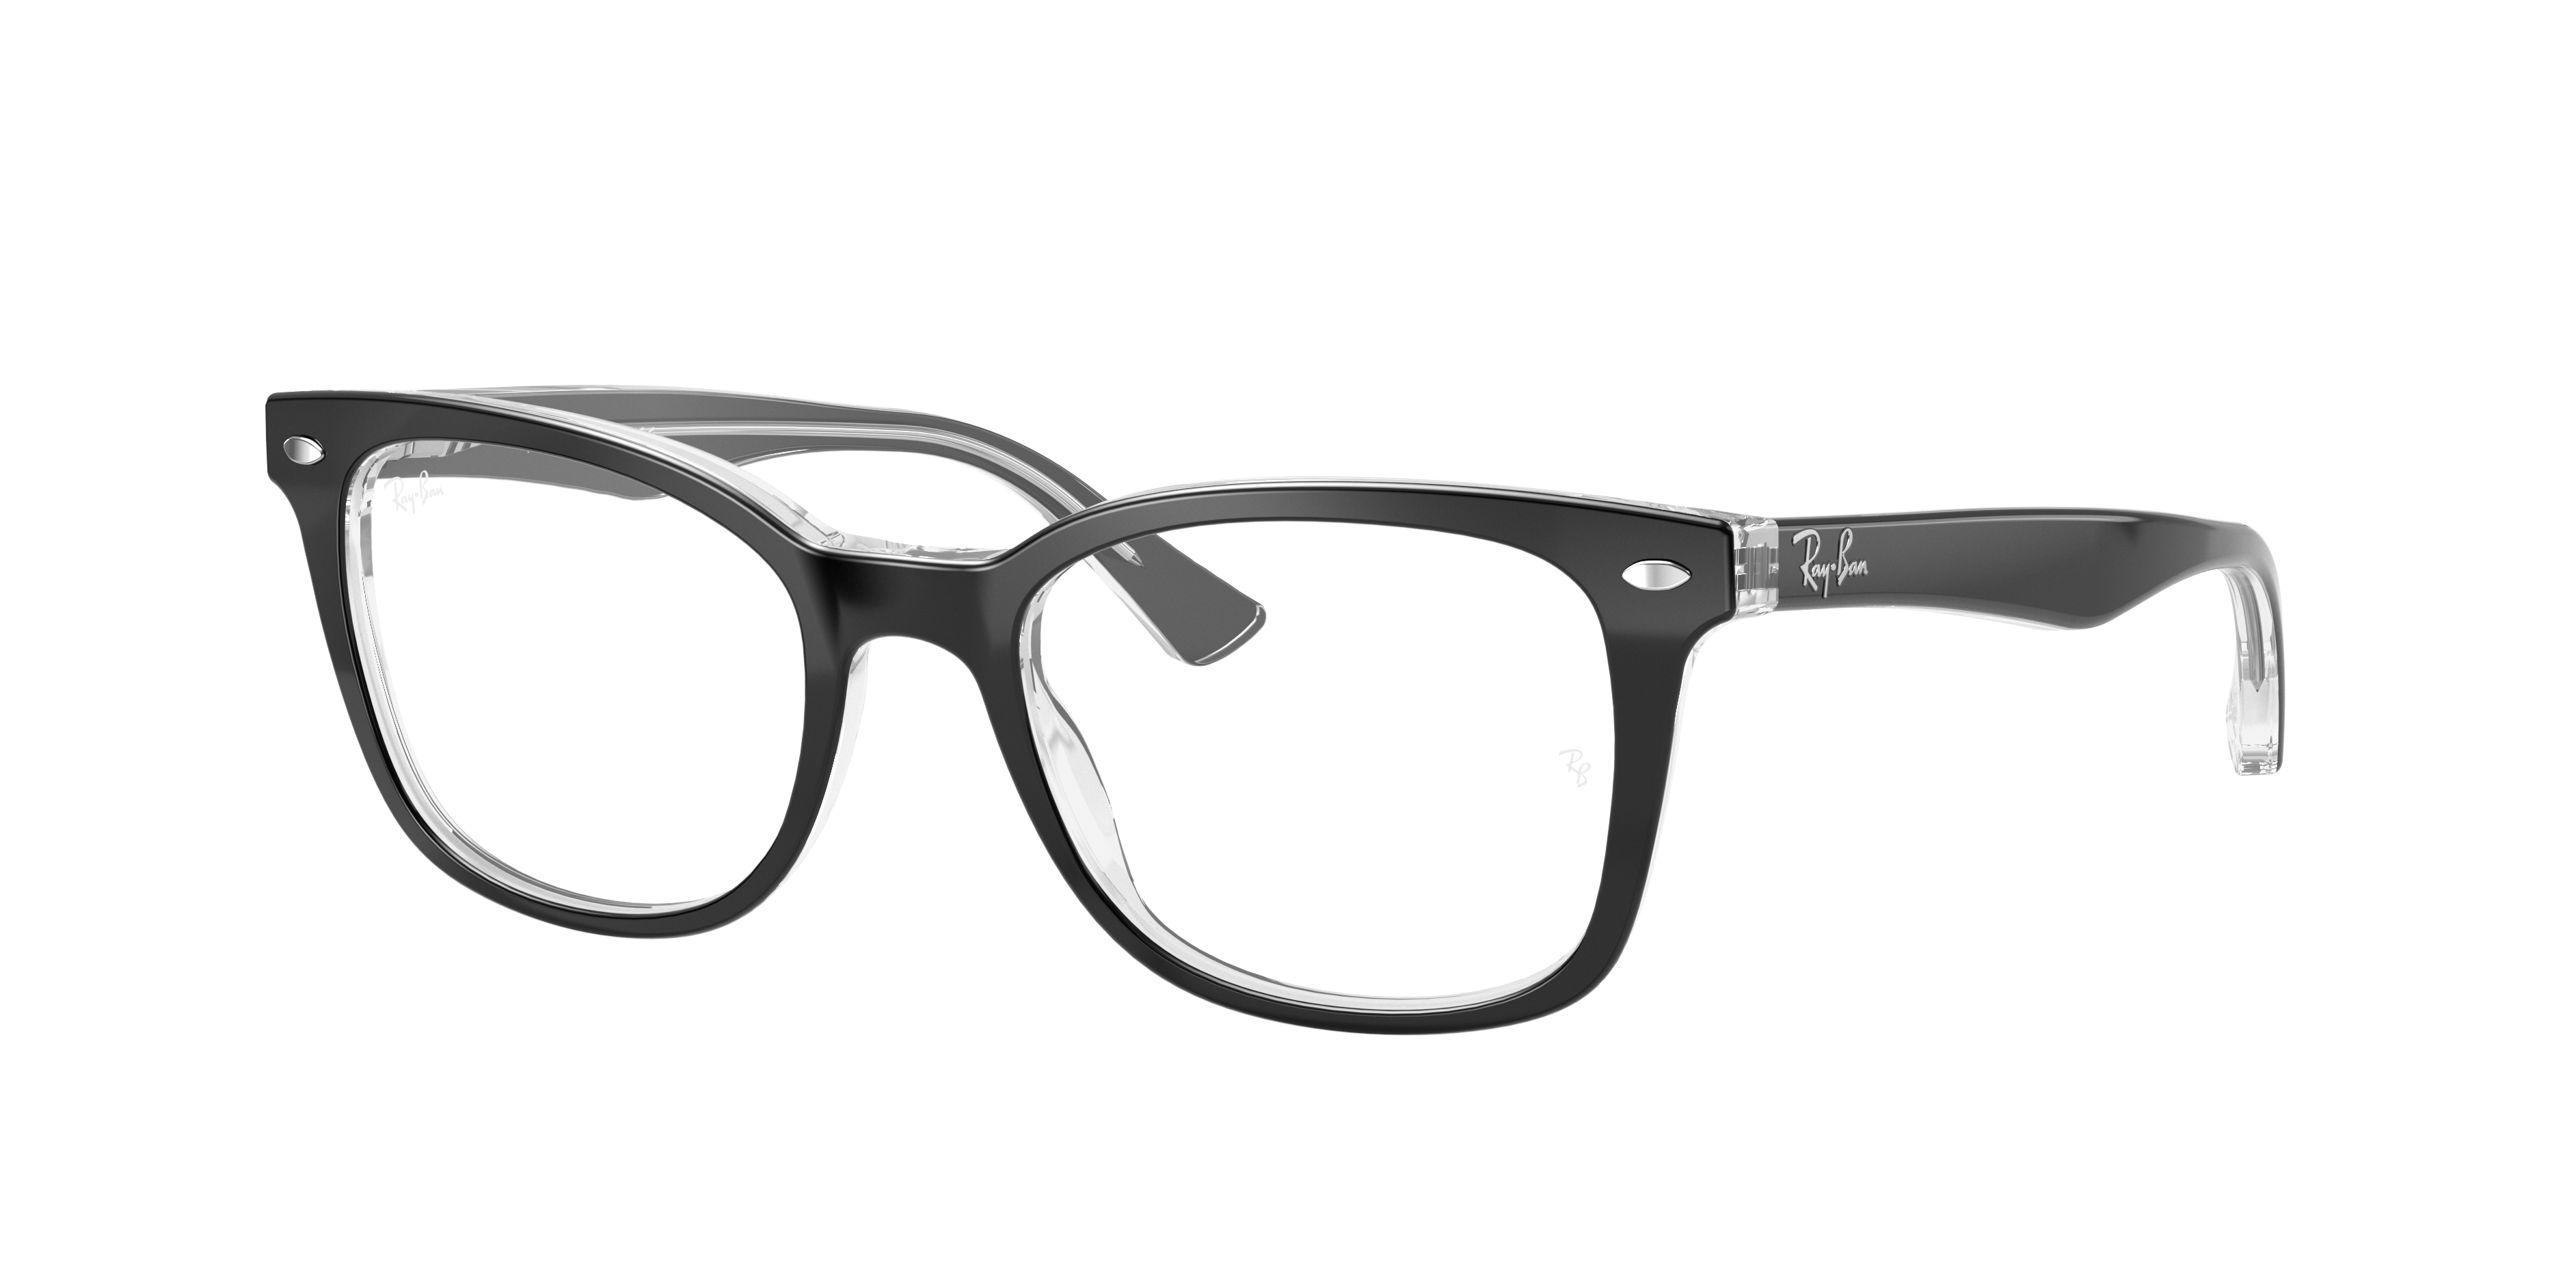 Rb5285 Optics Eyeglasses with Black On Transparent Frame | Ray-Ban®